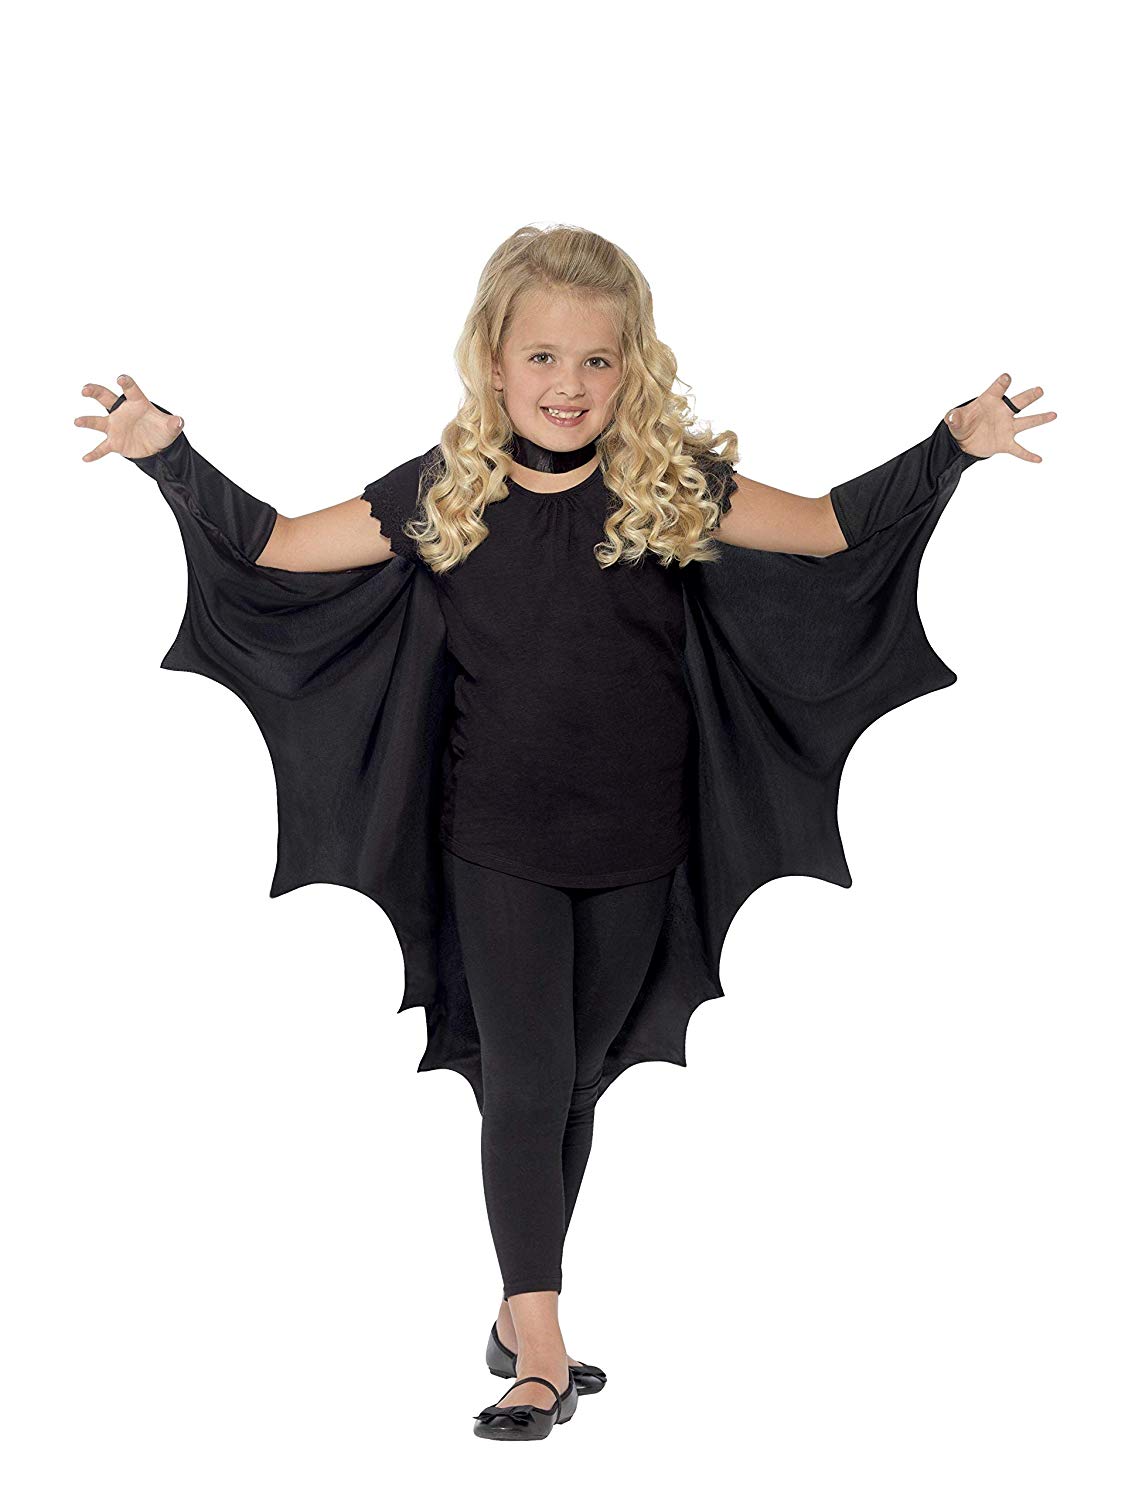 coole halloween kostüme für kinder 2018 gruselige halloween kostüme für Kinder halloween kostüm dracula vampir bat